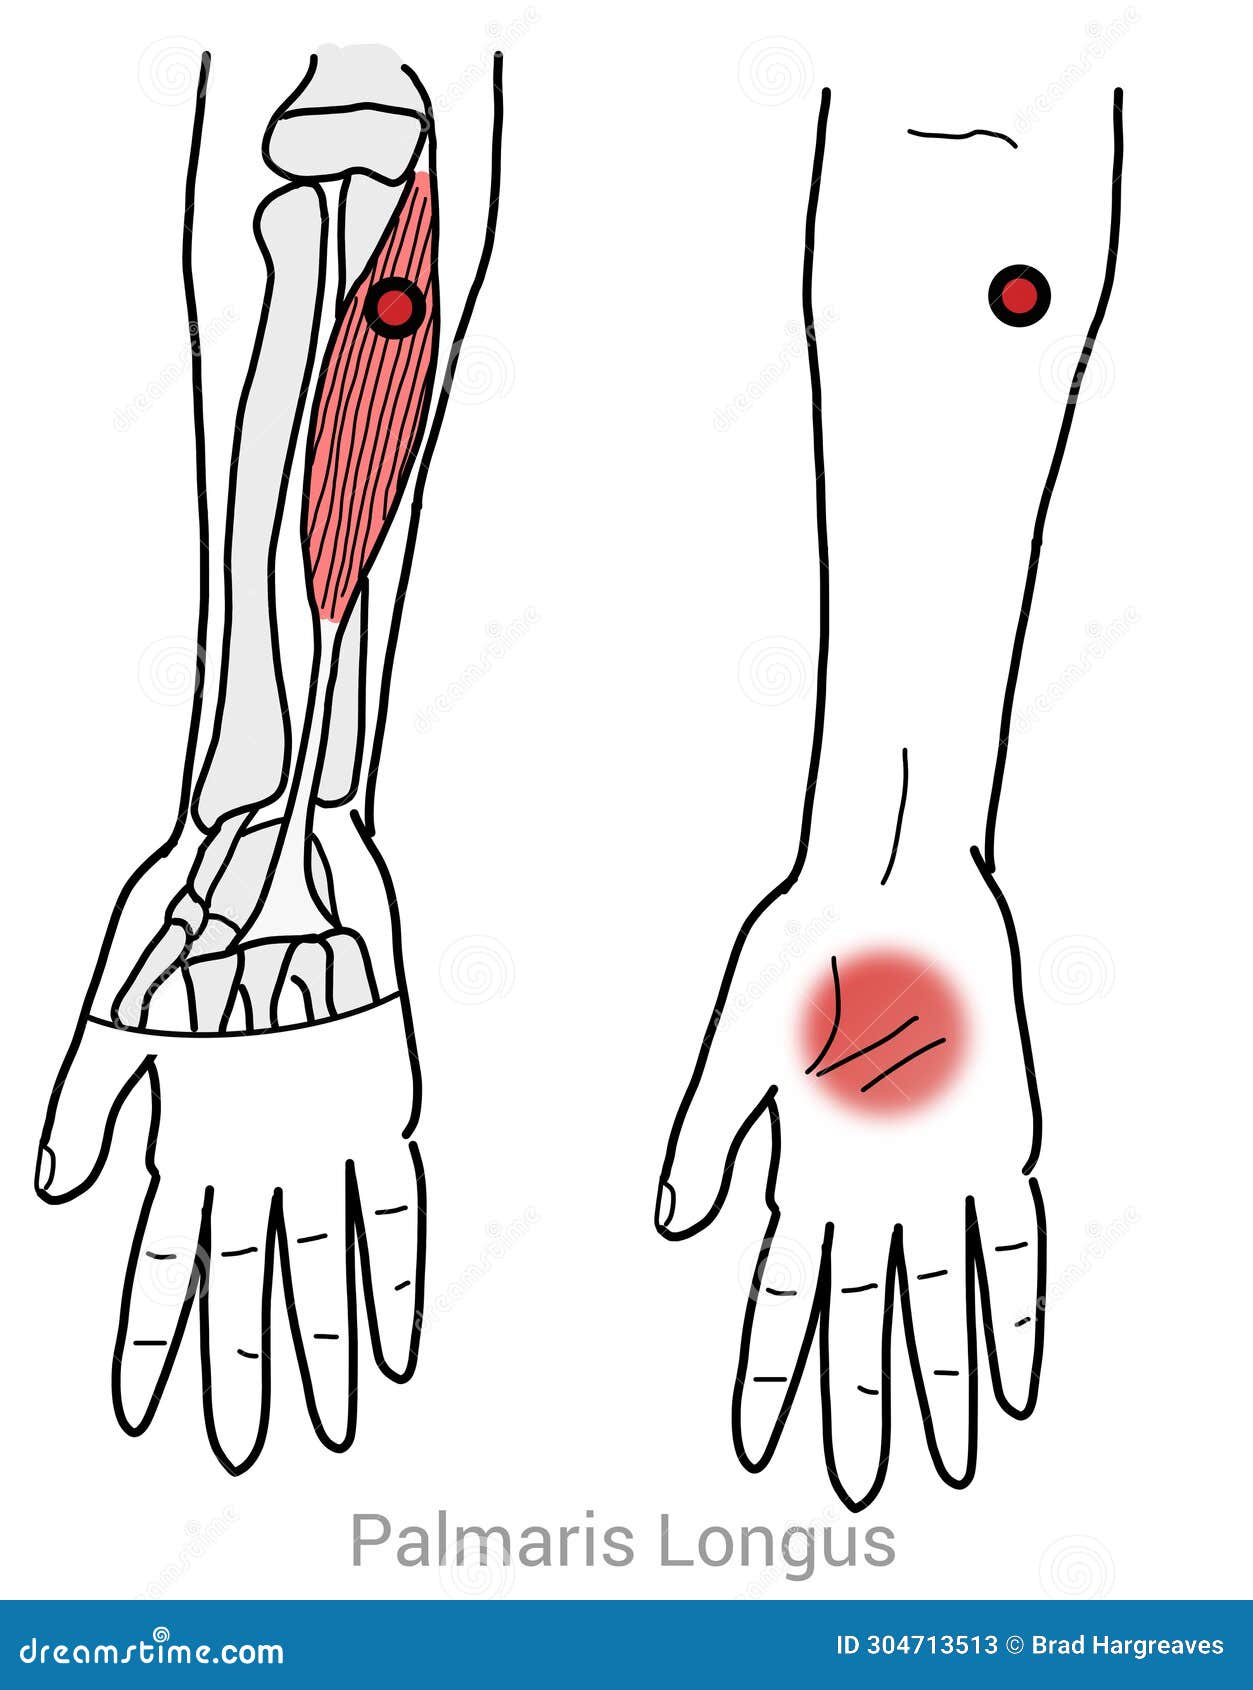 palmaris longus myofascial trigger points and hand palm pain